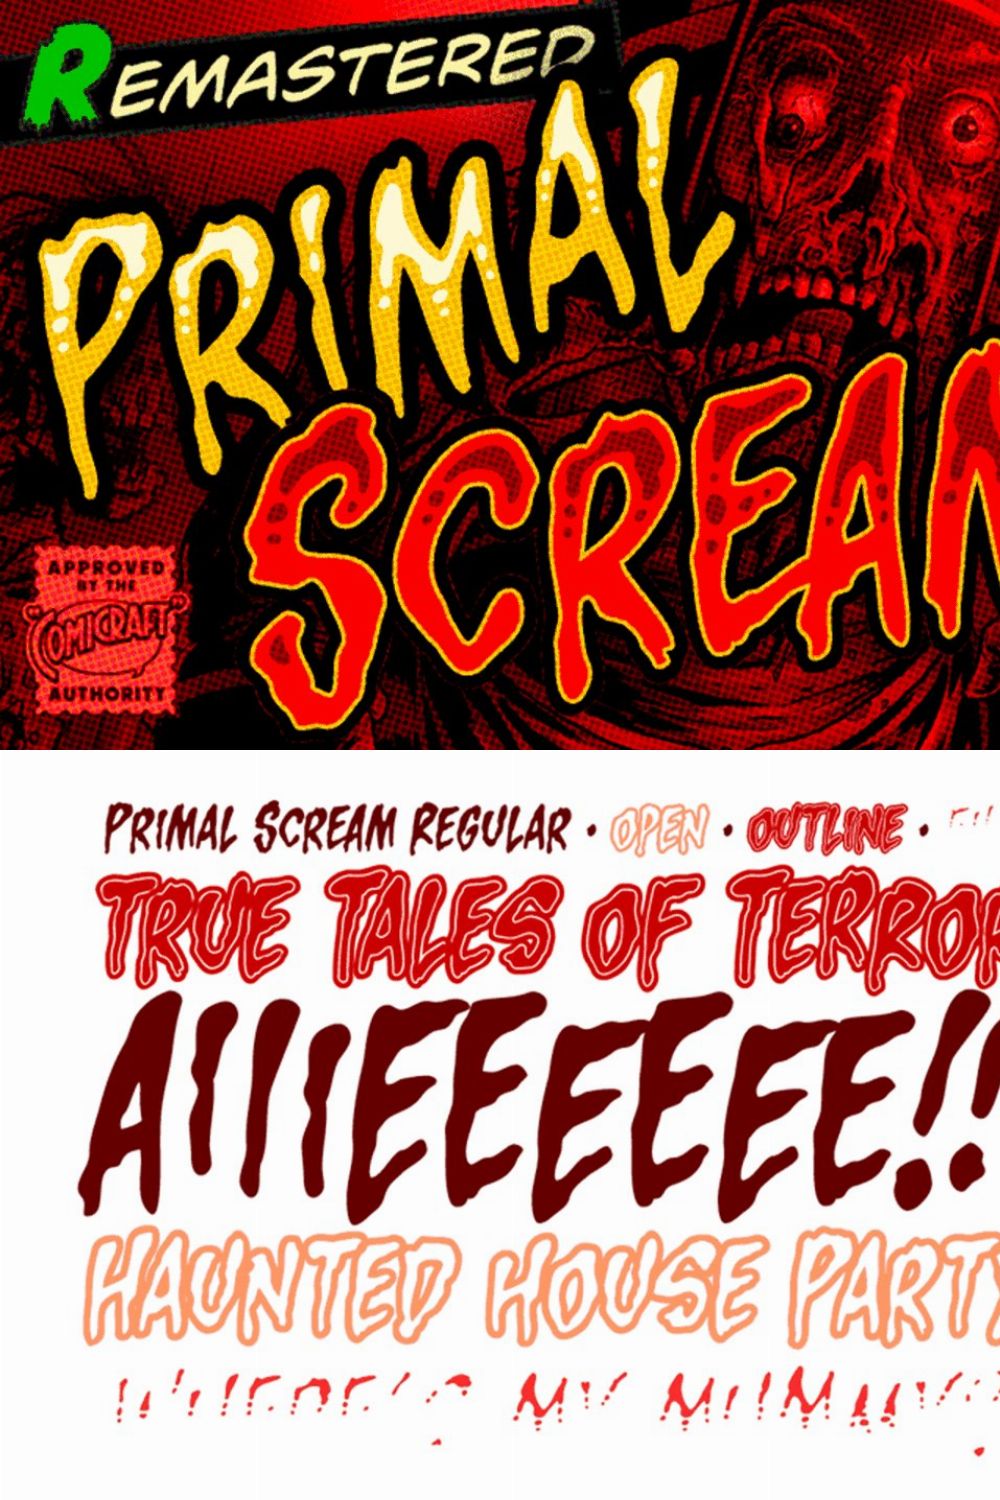 Primal Scream pinterest preview image.